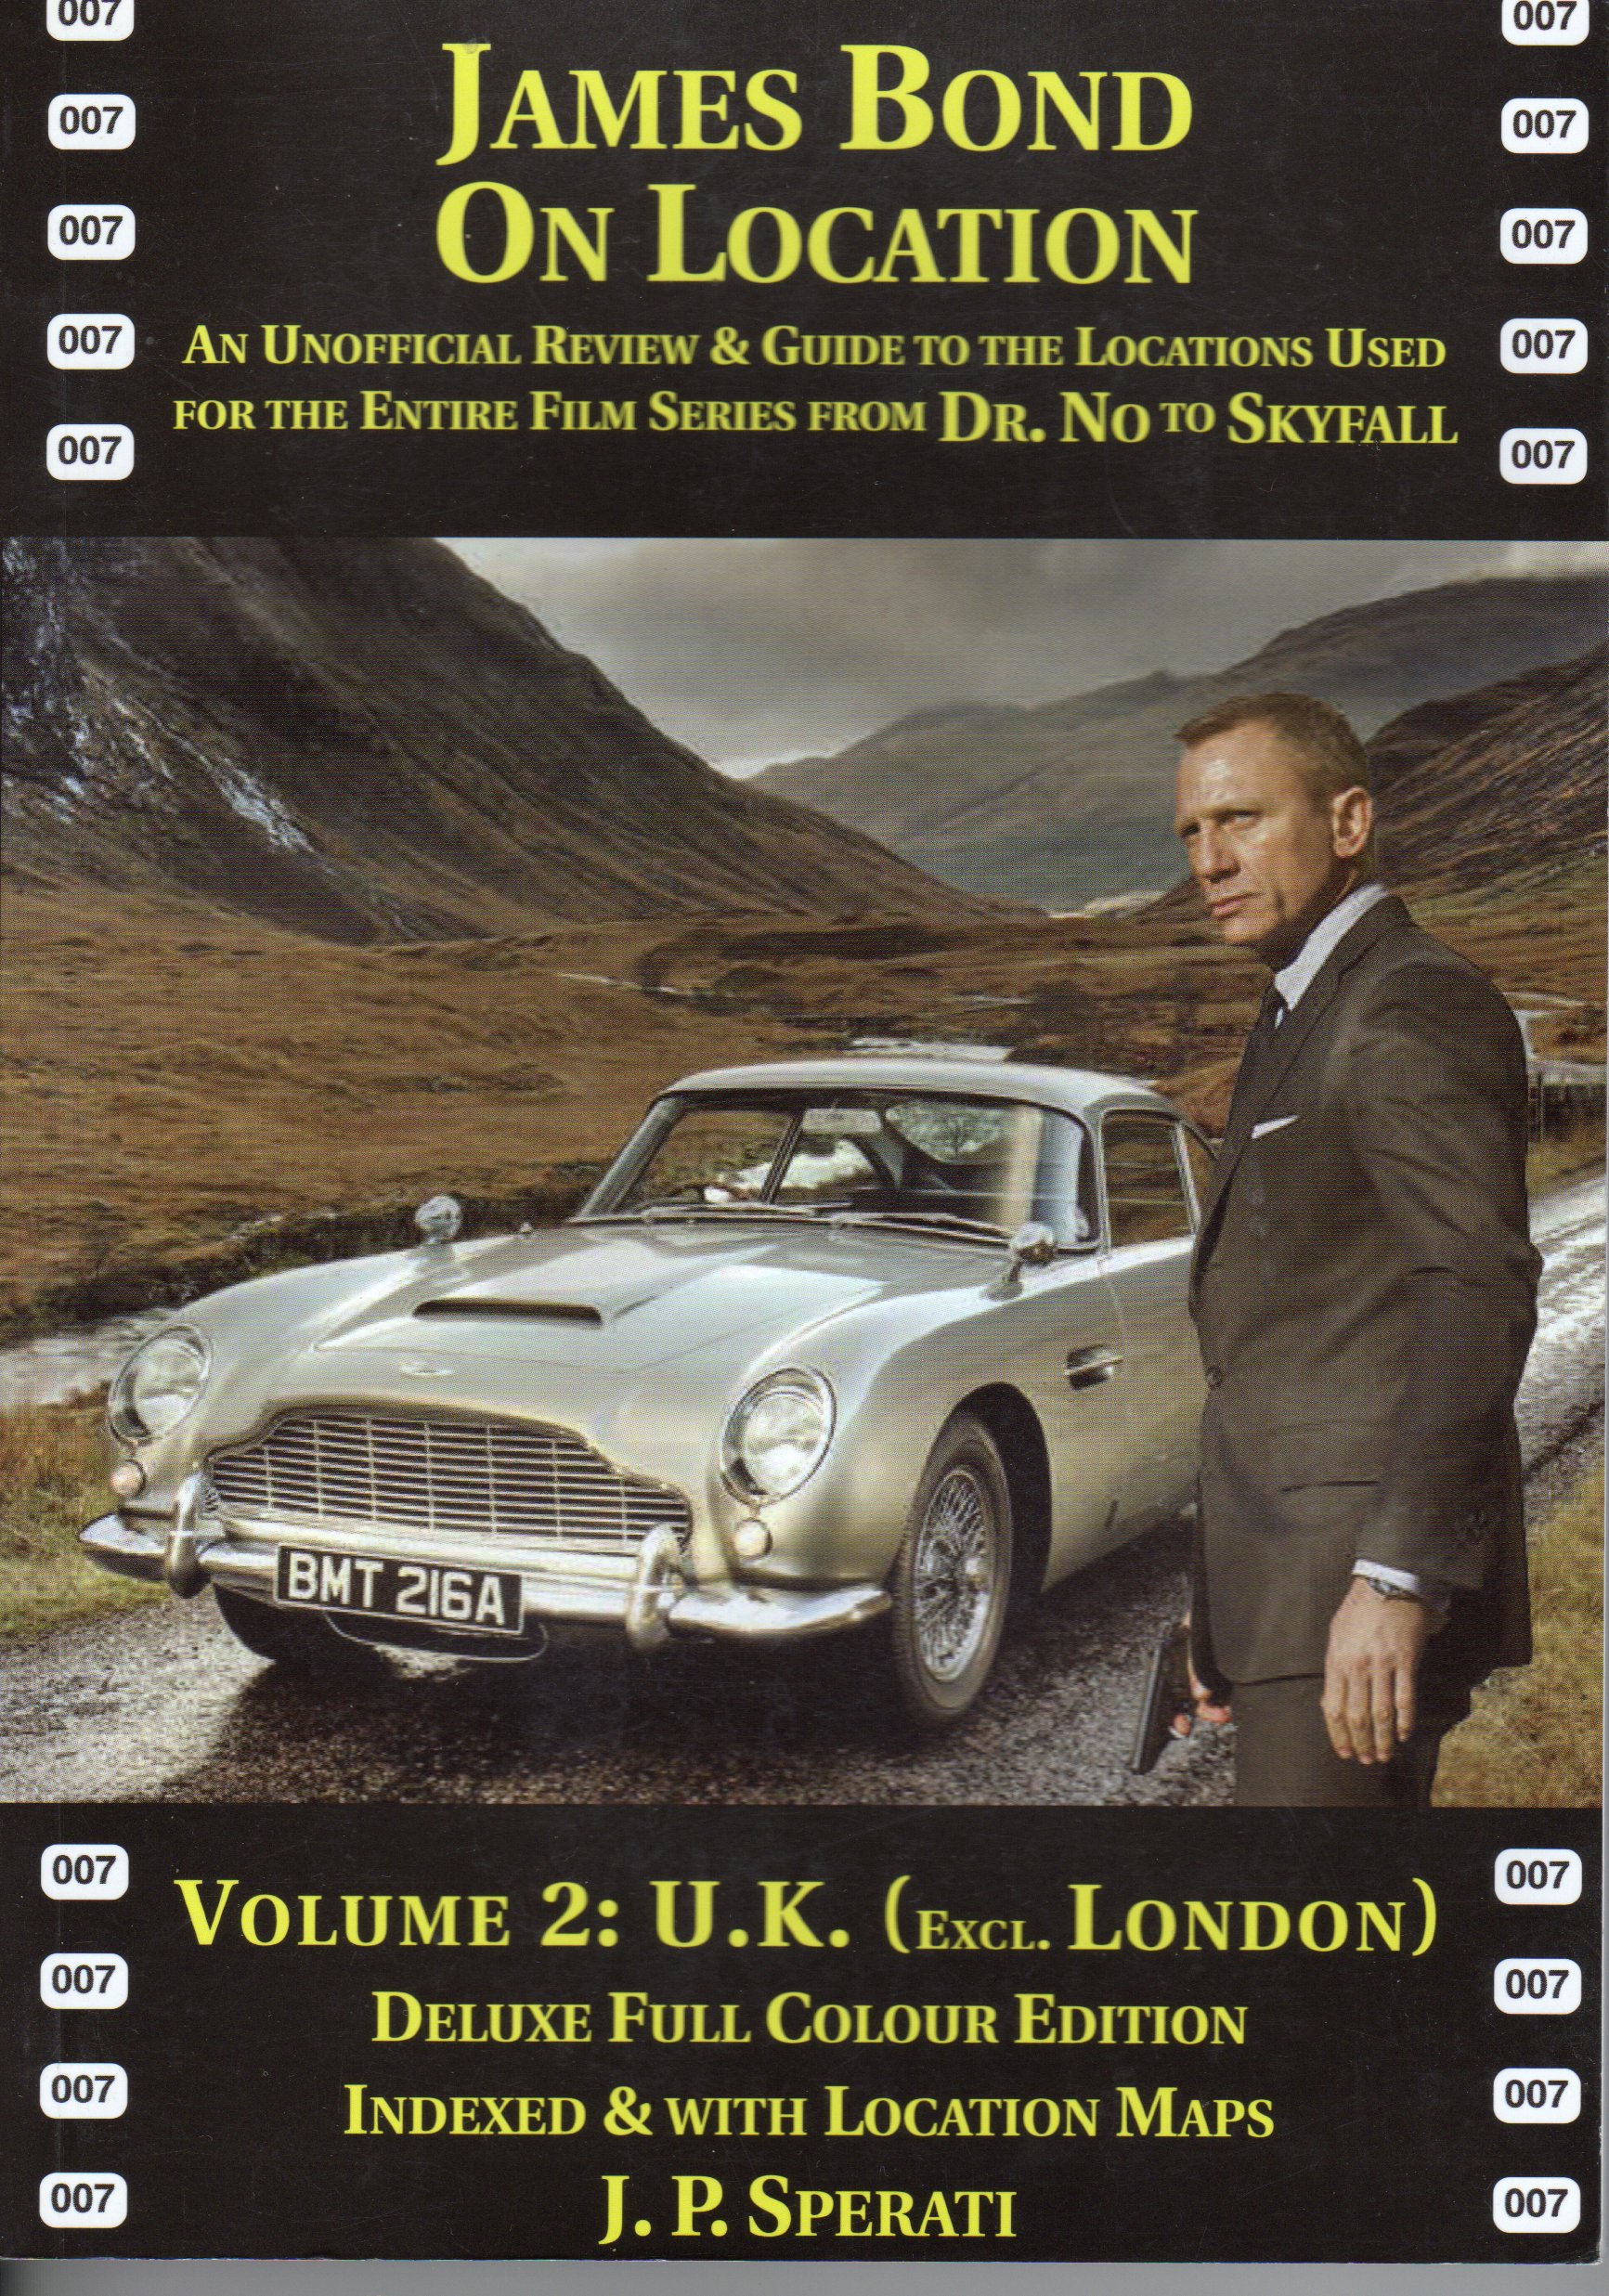 James Bond On Location, Volume 2 (UK excl. London)